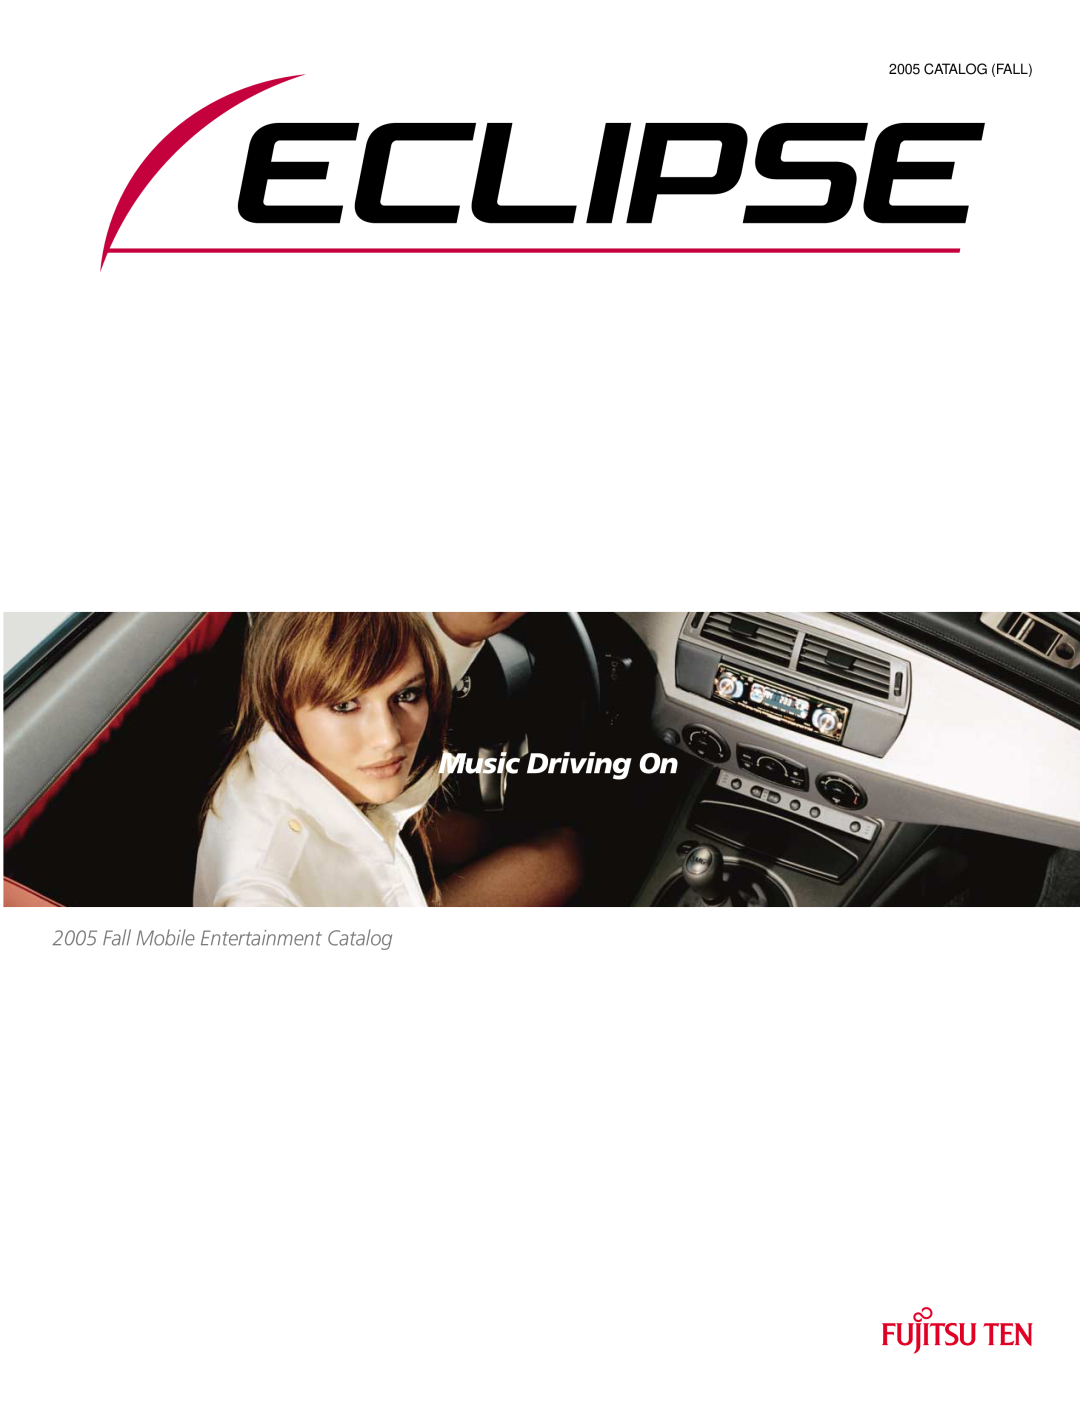 Eclipse - Fujitsu Ten AVN5495, AVX5000, CH3083, RMC105, SIR-ECL1 manual Fall Mobile Entertainment Catalog, Catalog Fall 